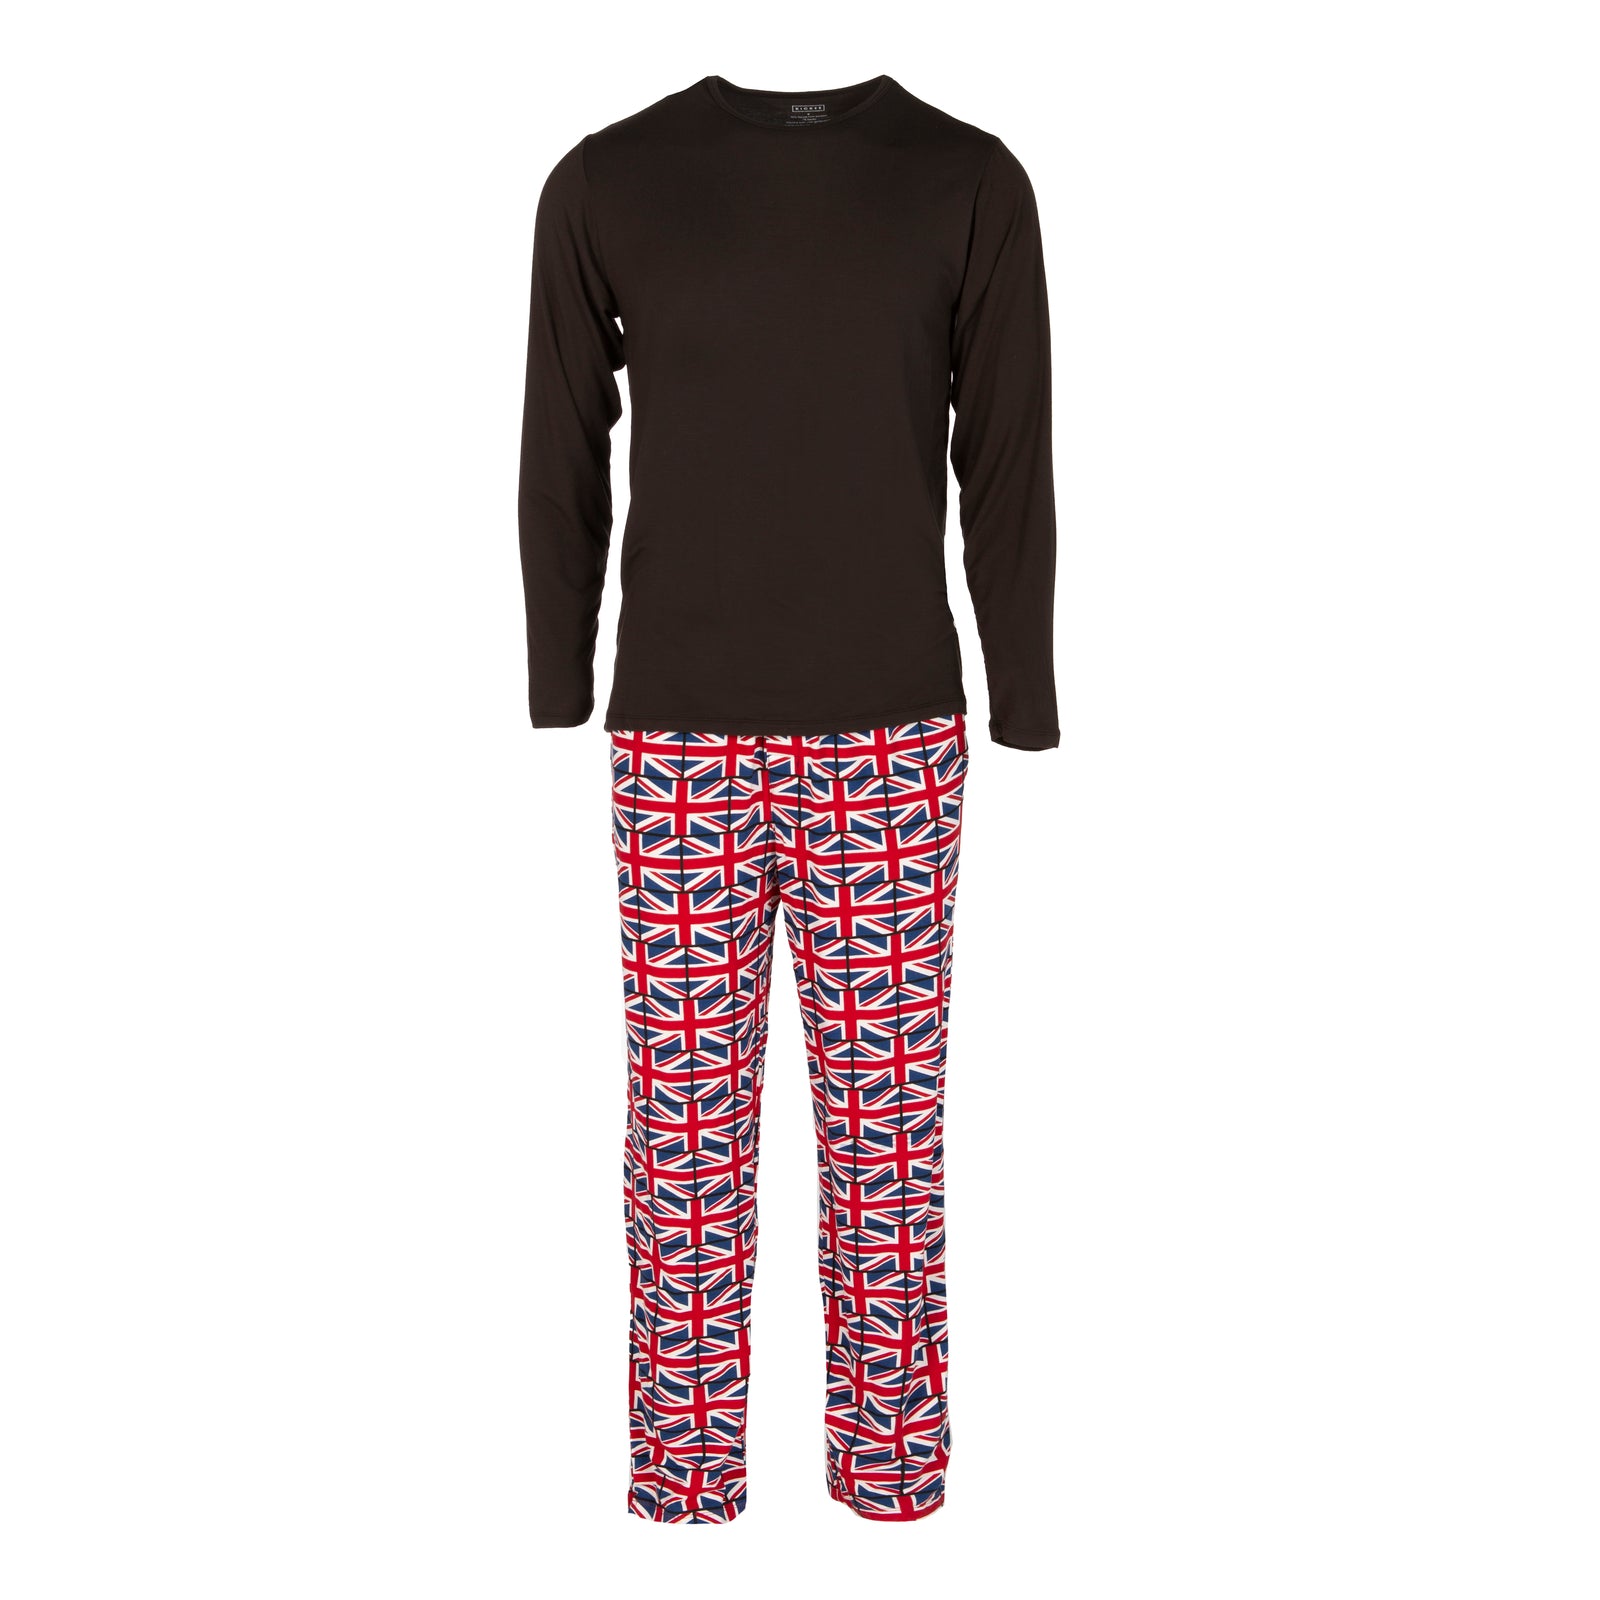 Kickee Pants Men's Print Long Sleeve Pajama Set - Union Jack – Casp ...